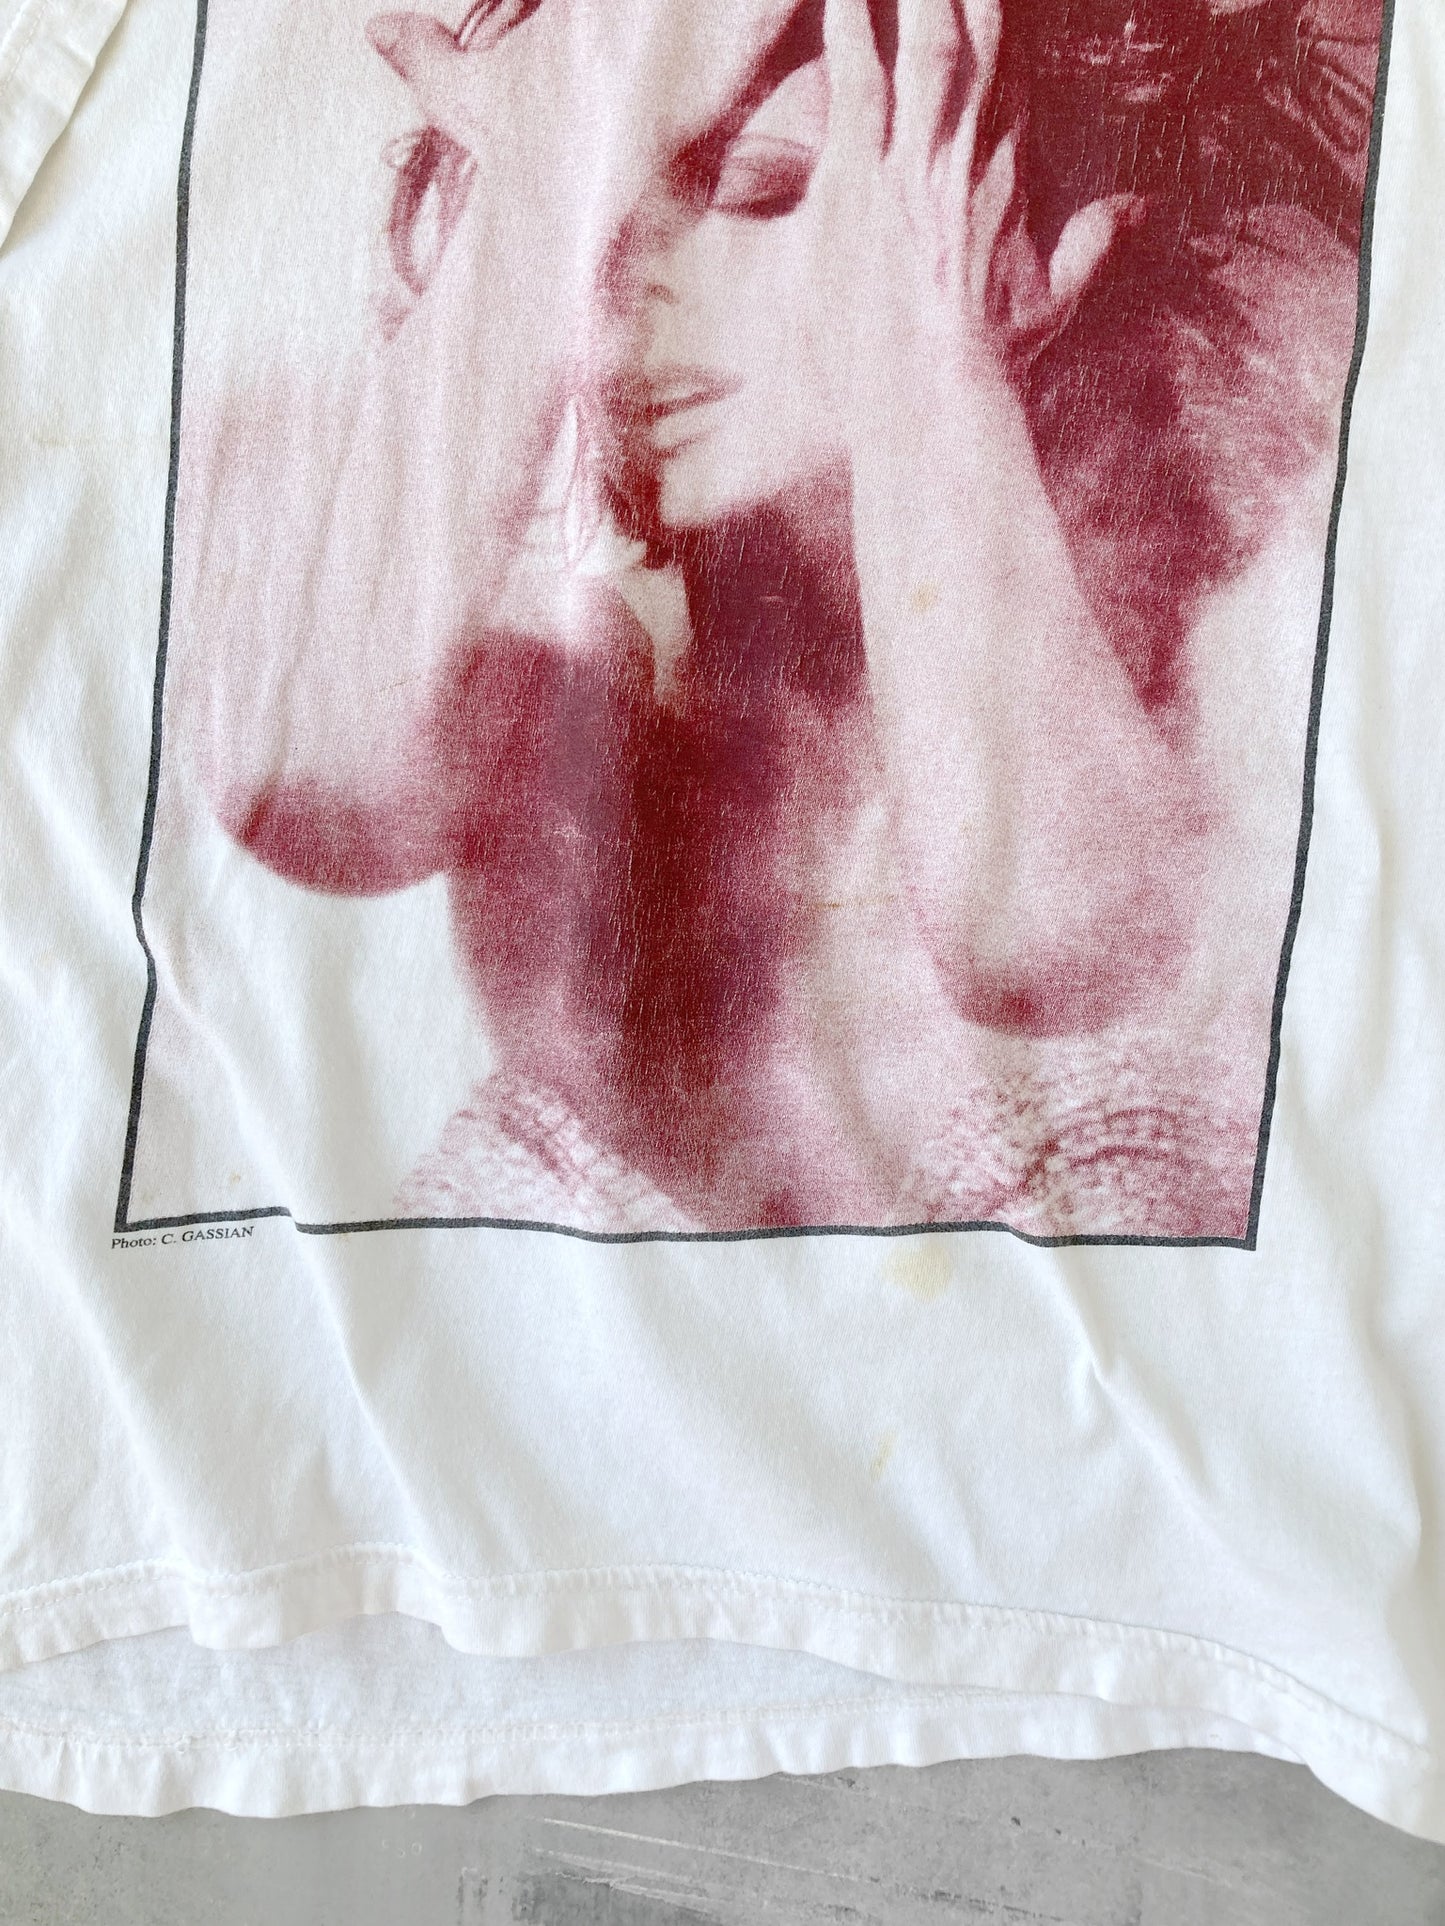 Mylene Farmer Tour T-shirt '96 - XL